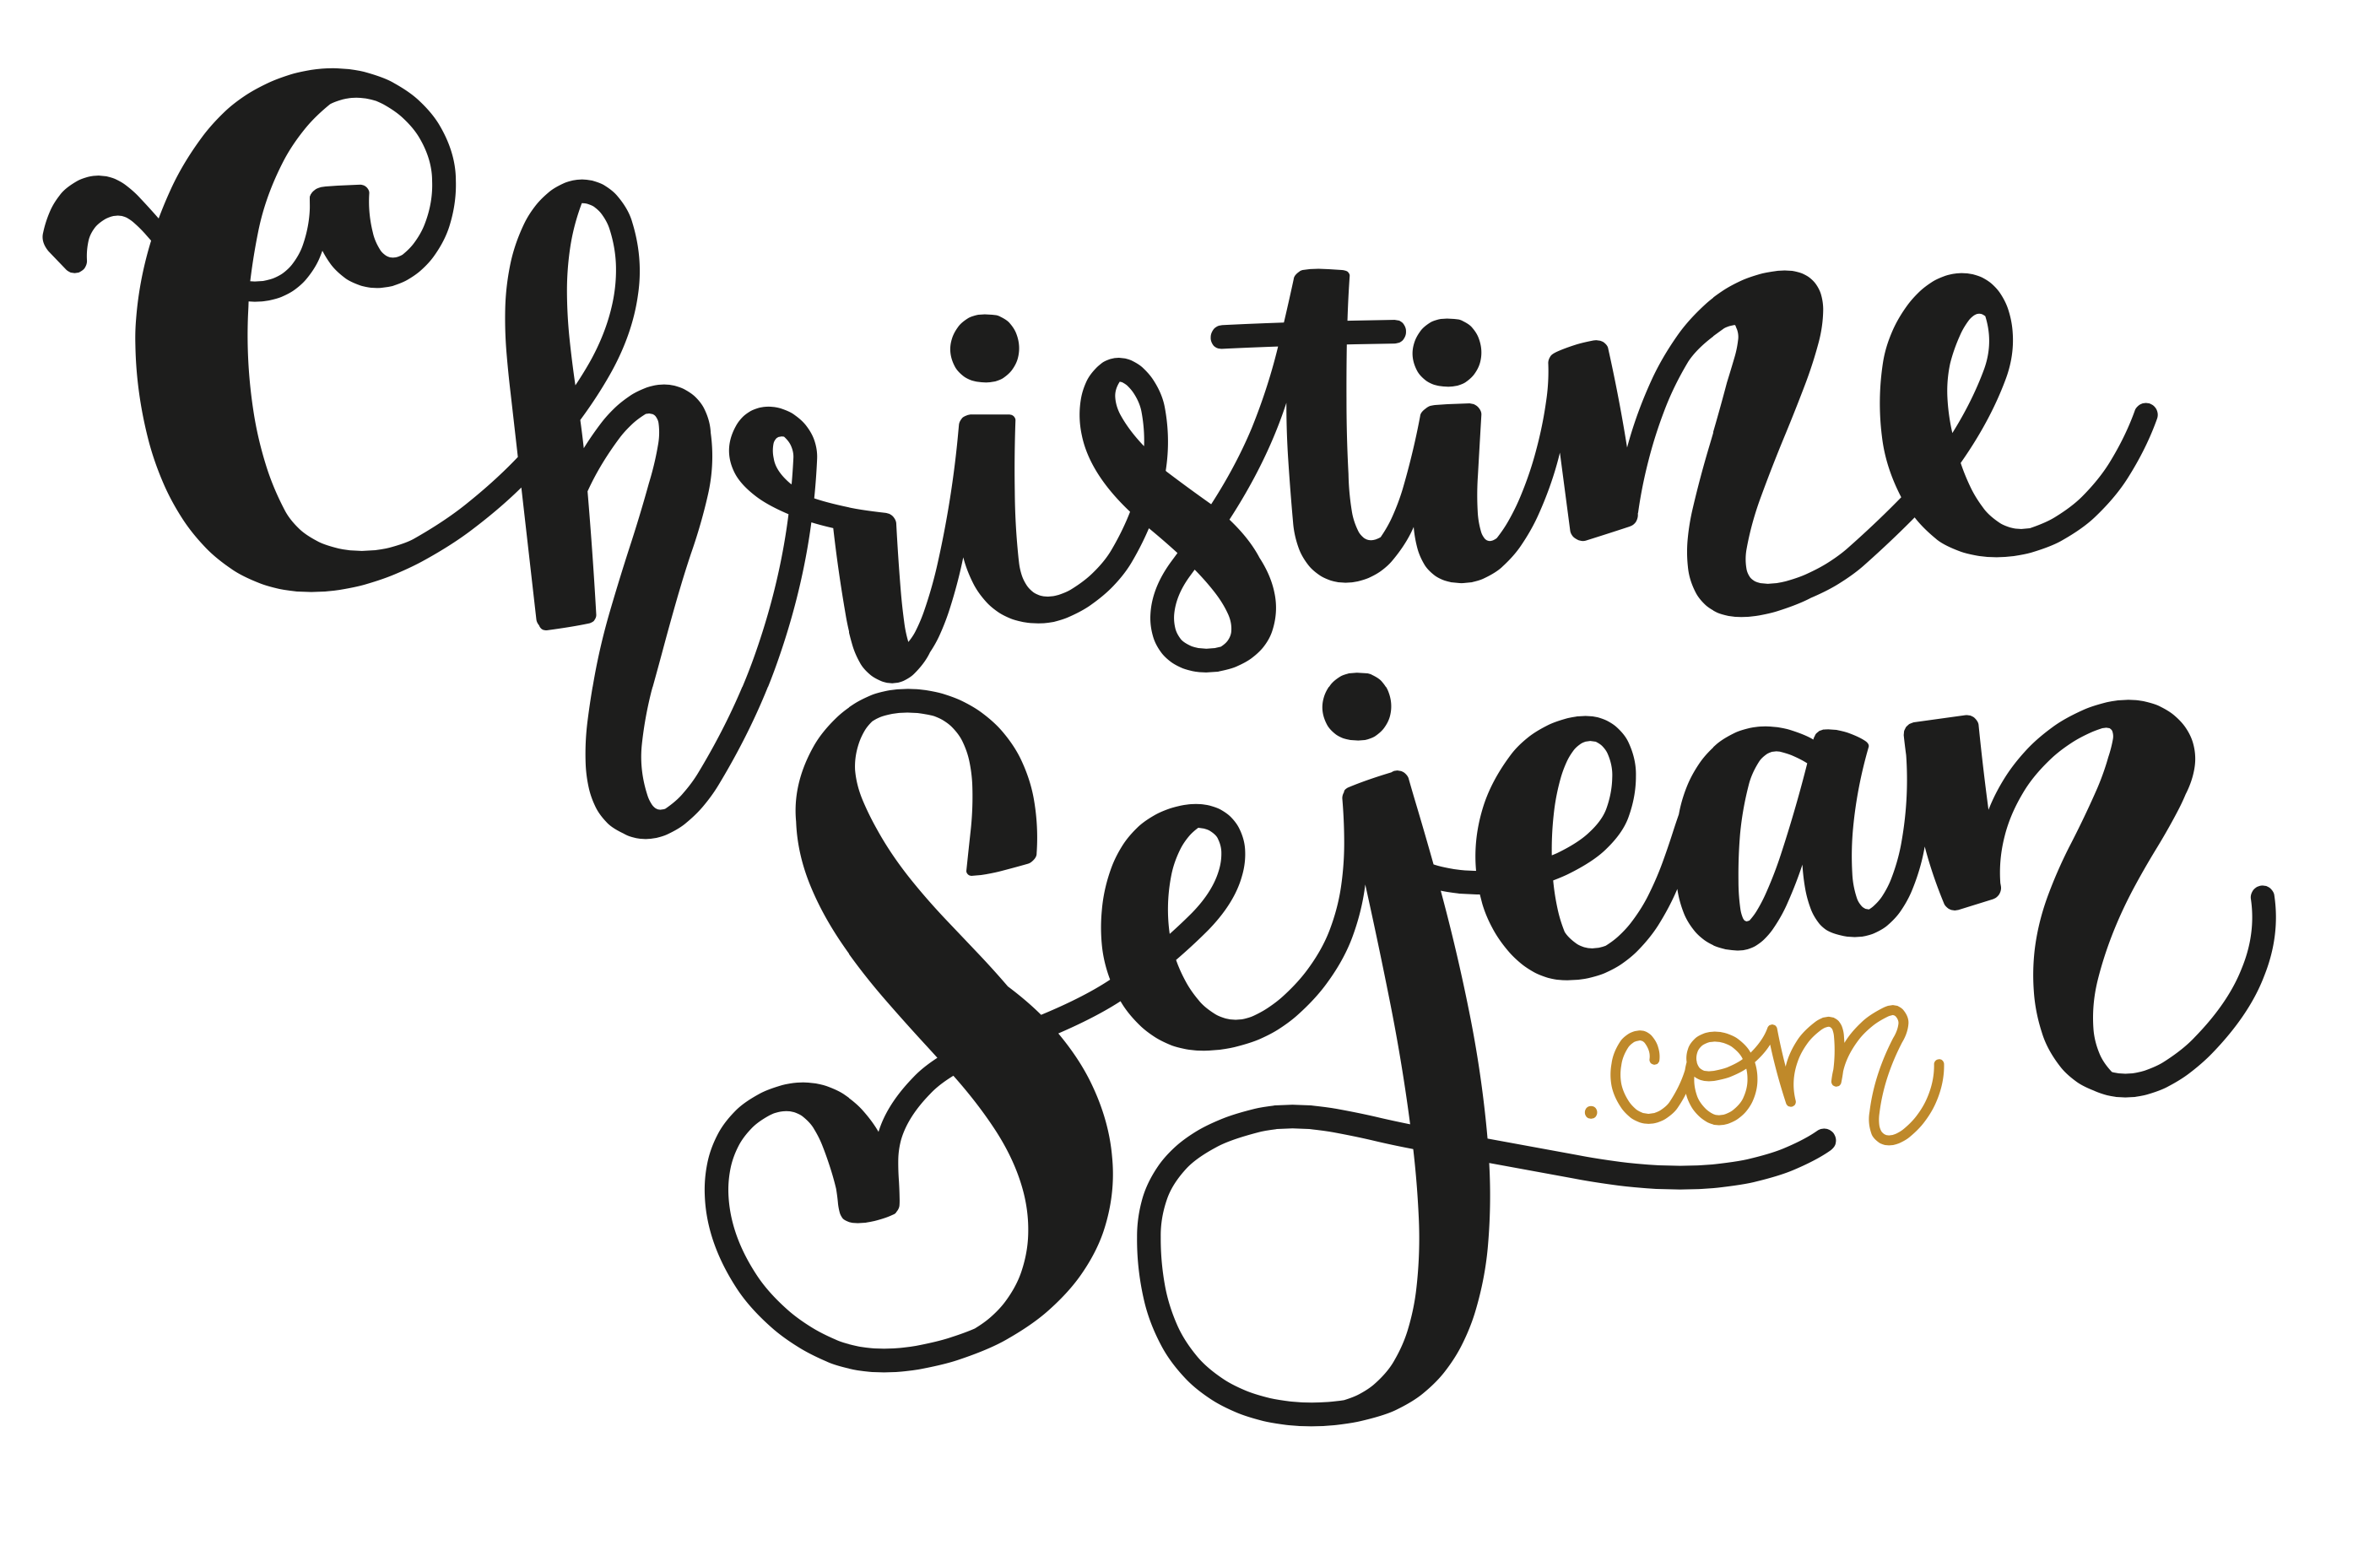 Christine Sejean